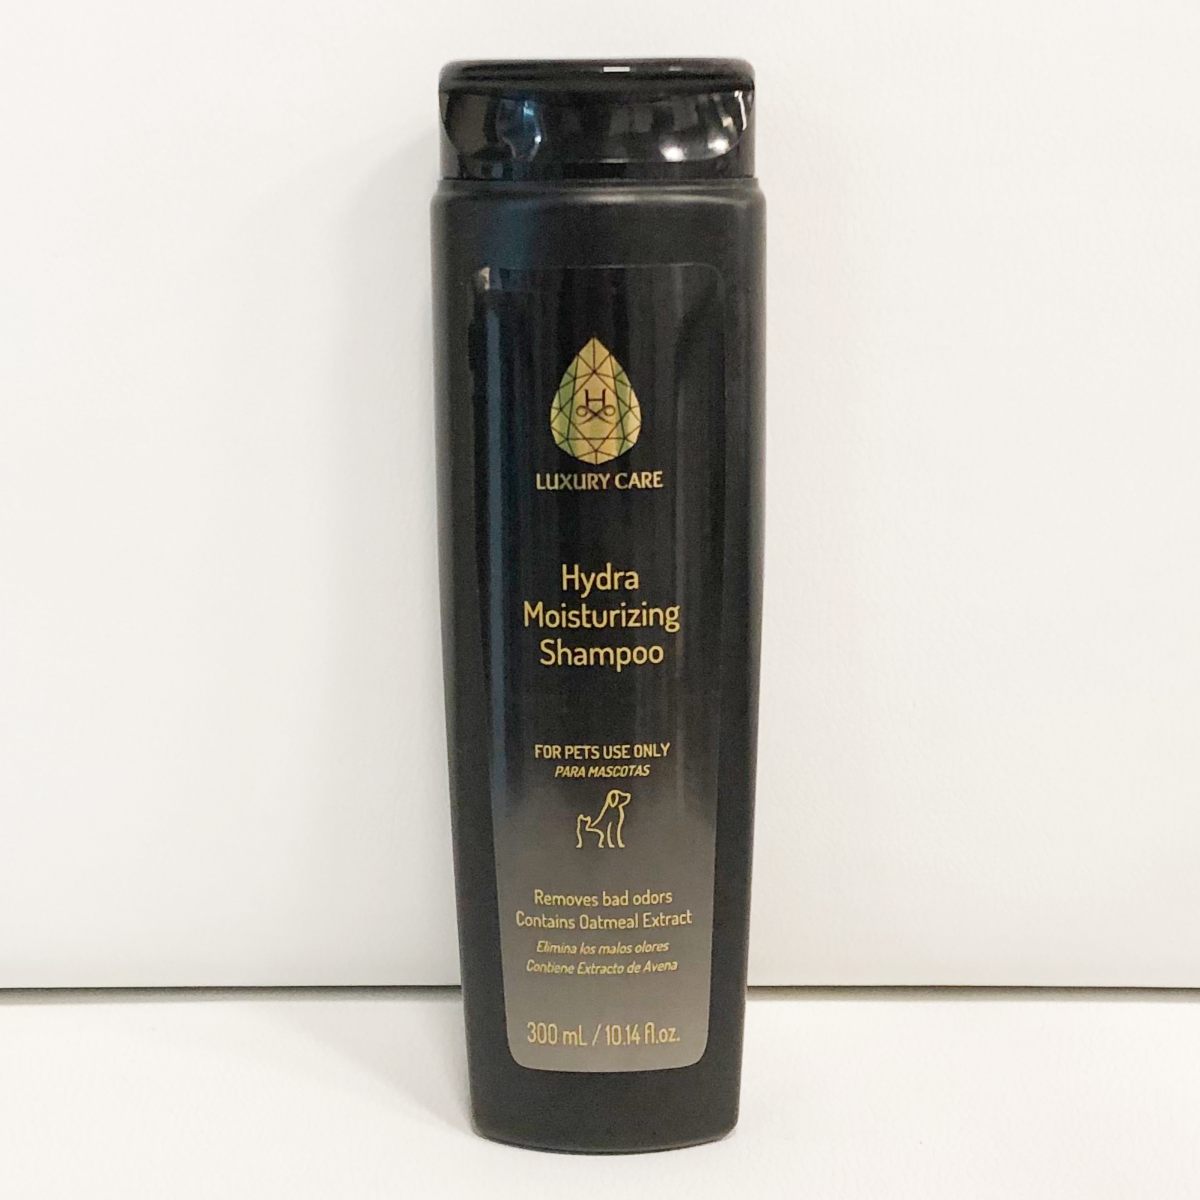 Hydra shampoo idratante per cani